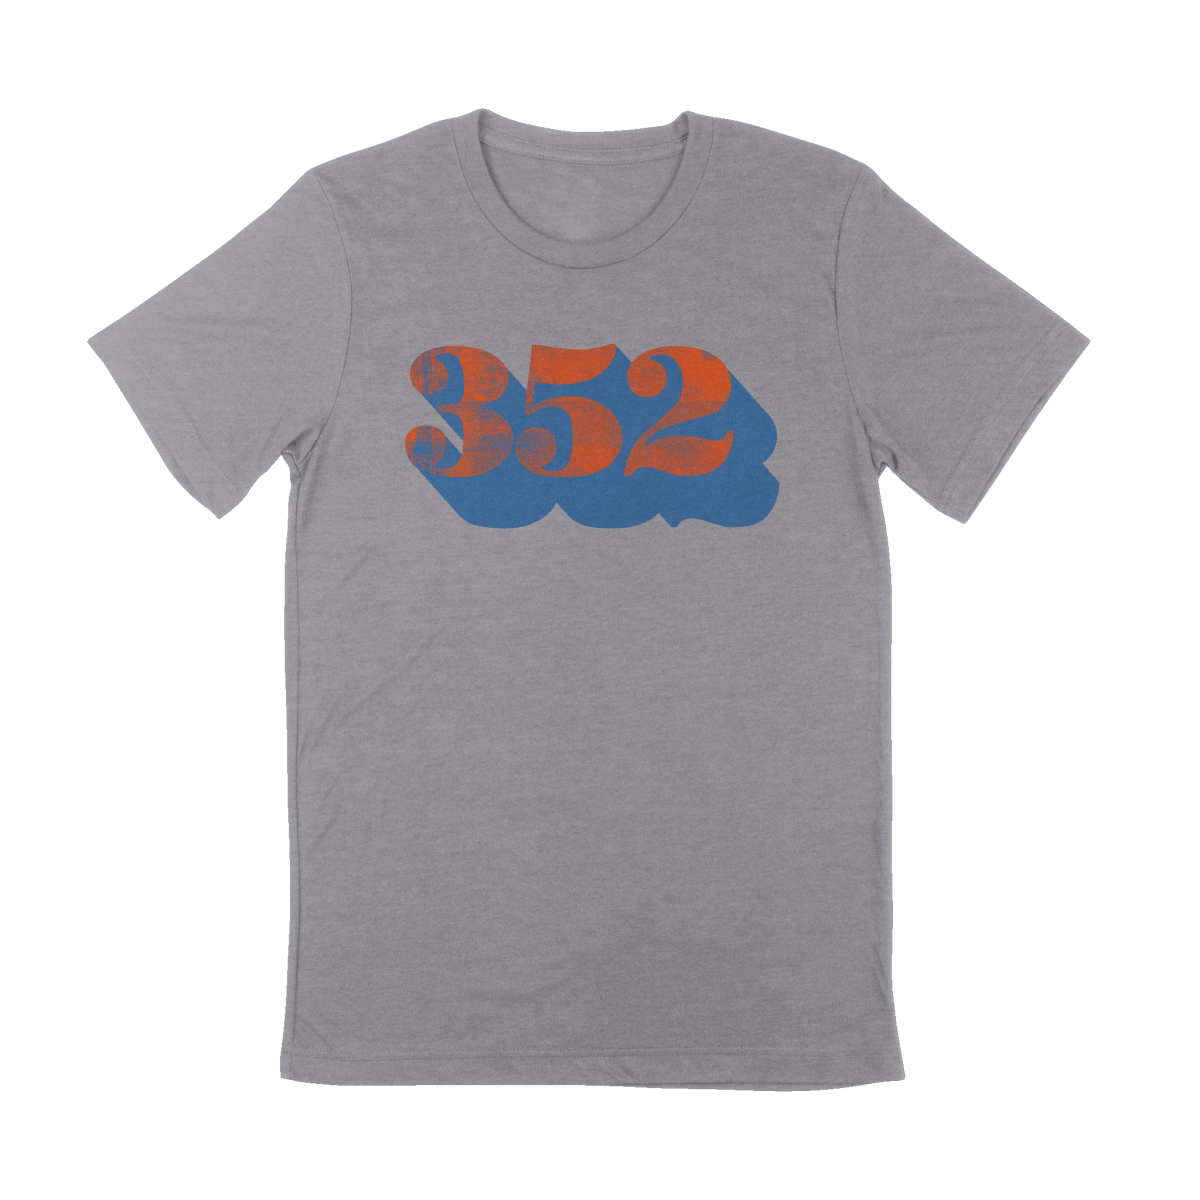 Gainesville 352 Area Code T-Shirt - Shop B-Unlimited